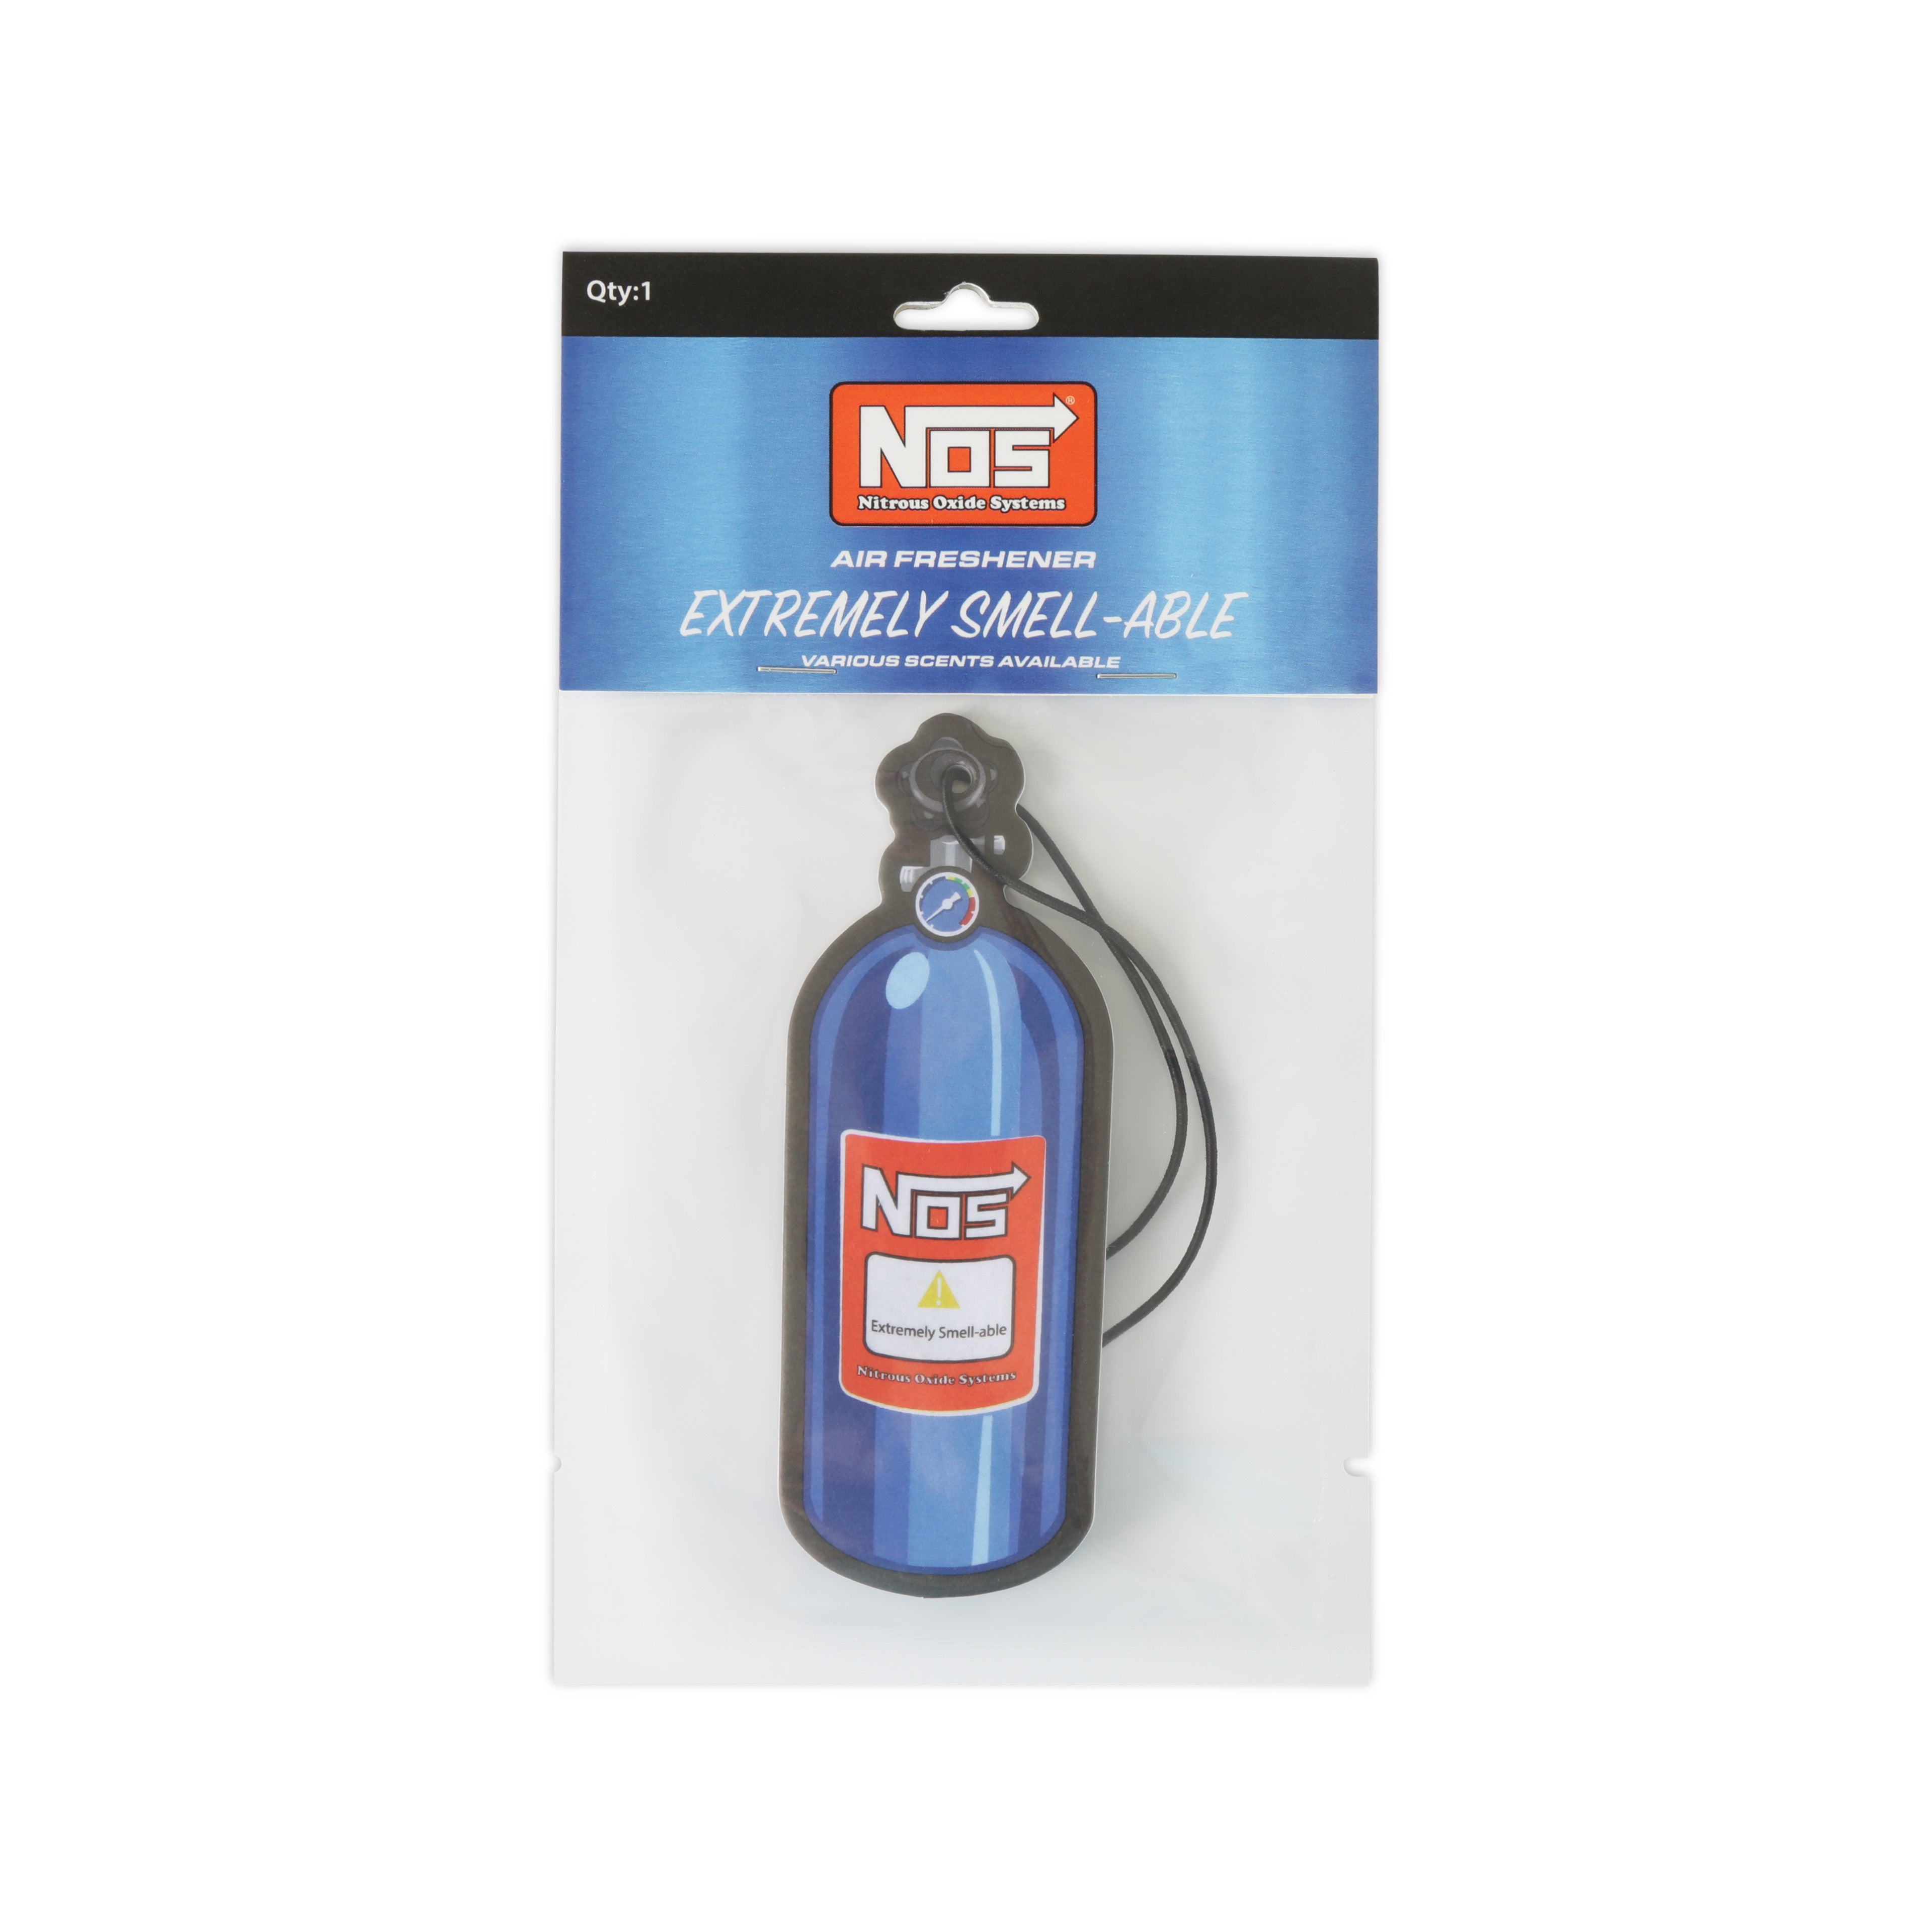 NOS/Nitrous Oxide System Air Freshener 36-544GA